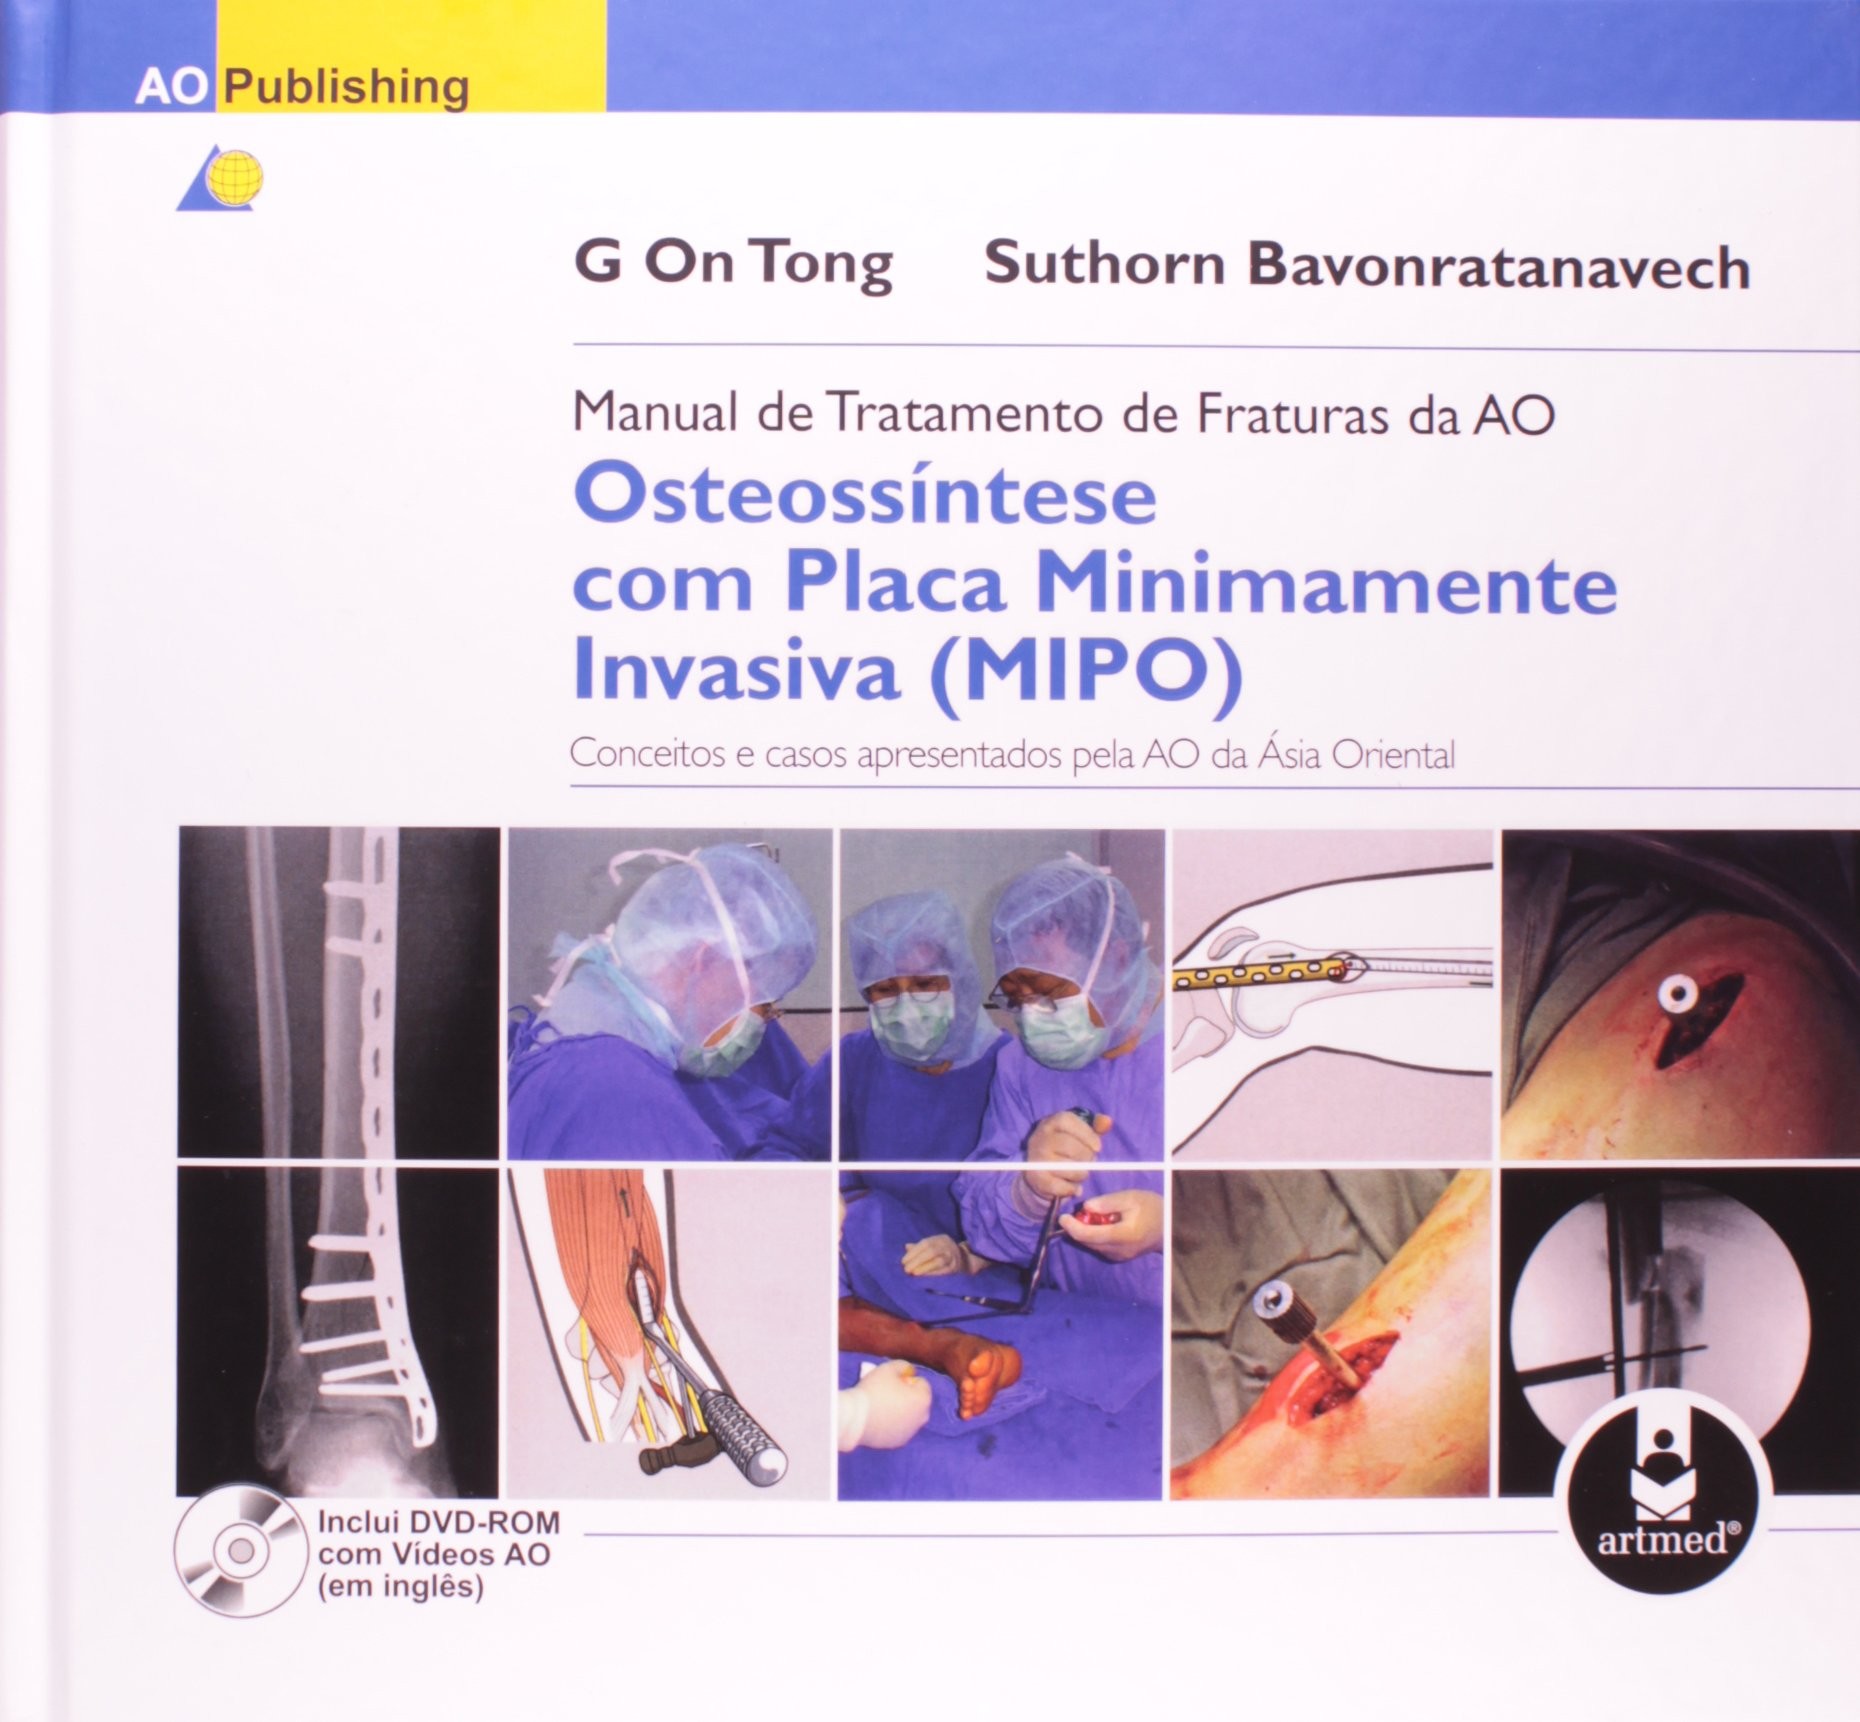 Manual de Tratamento de Fraturas da AO: Osteossíntese com Placa Minimamente Invasiva (MIPO)